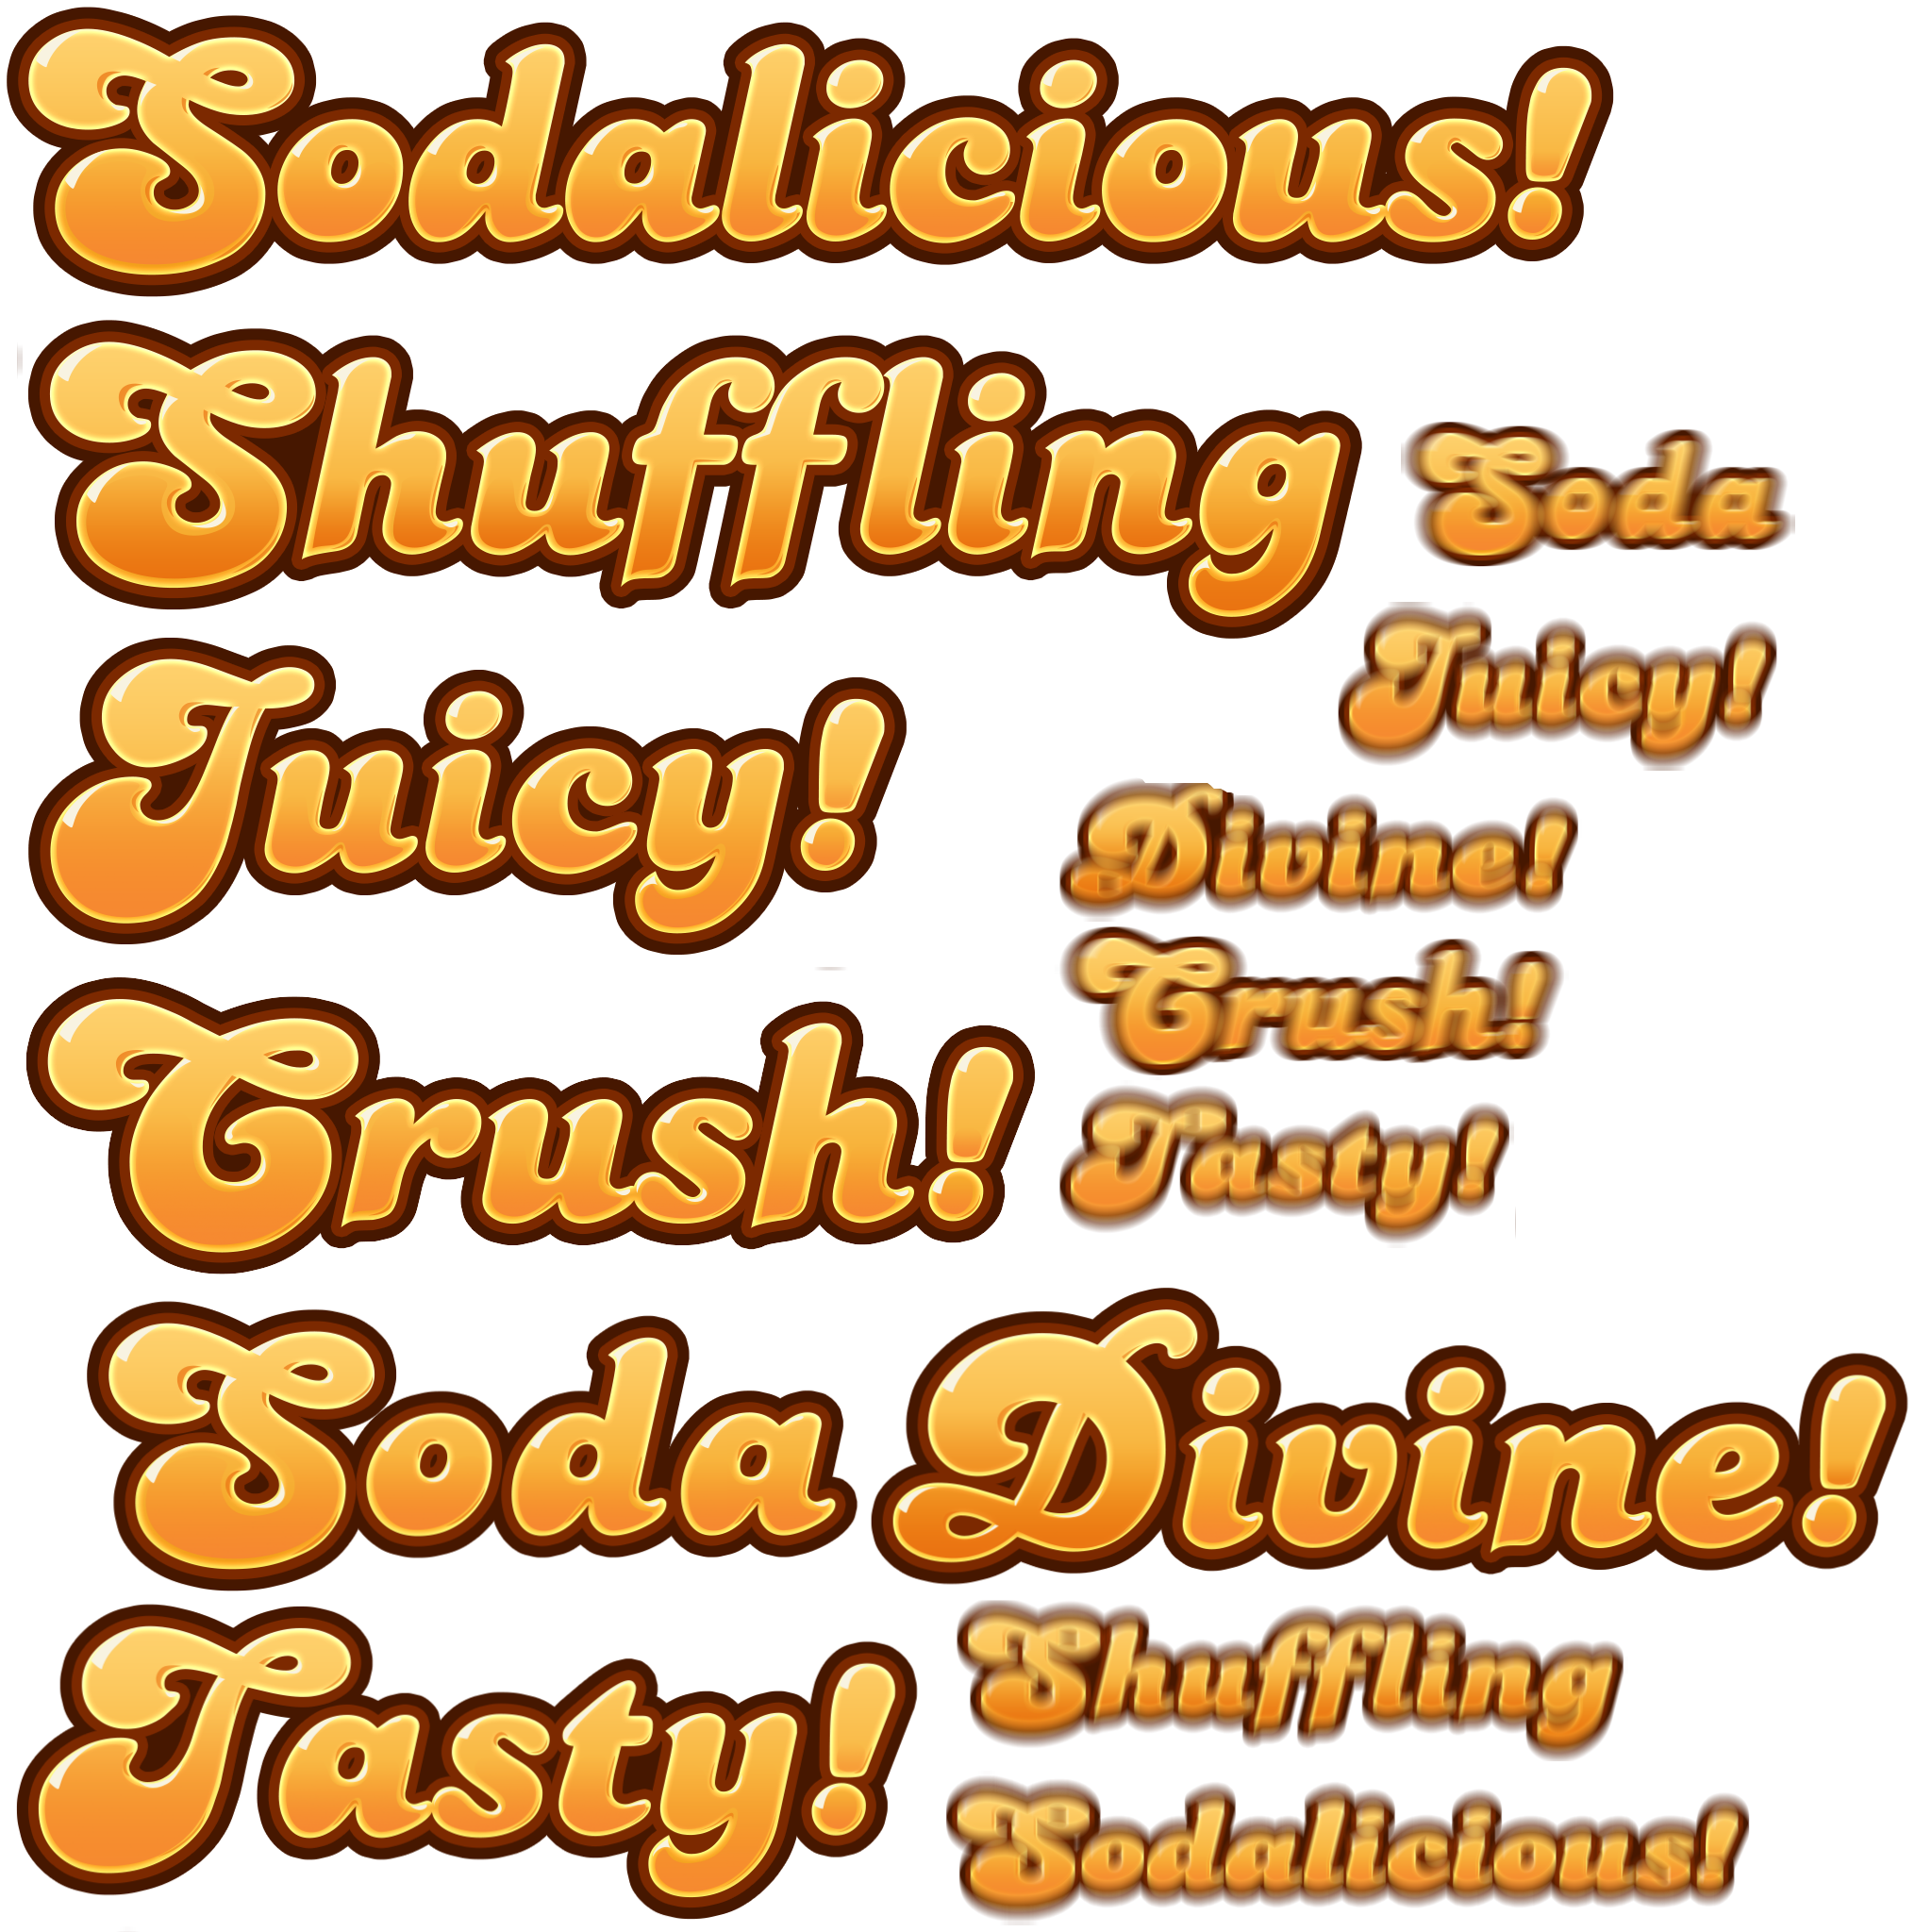 Candy Crush Soda Saga - Exclamations